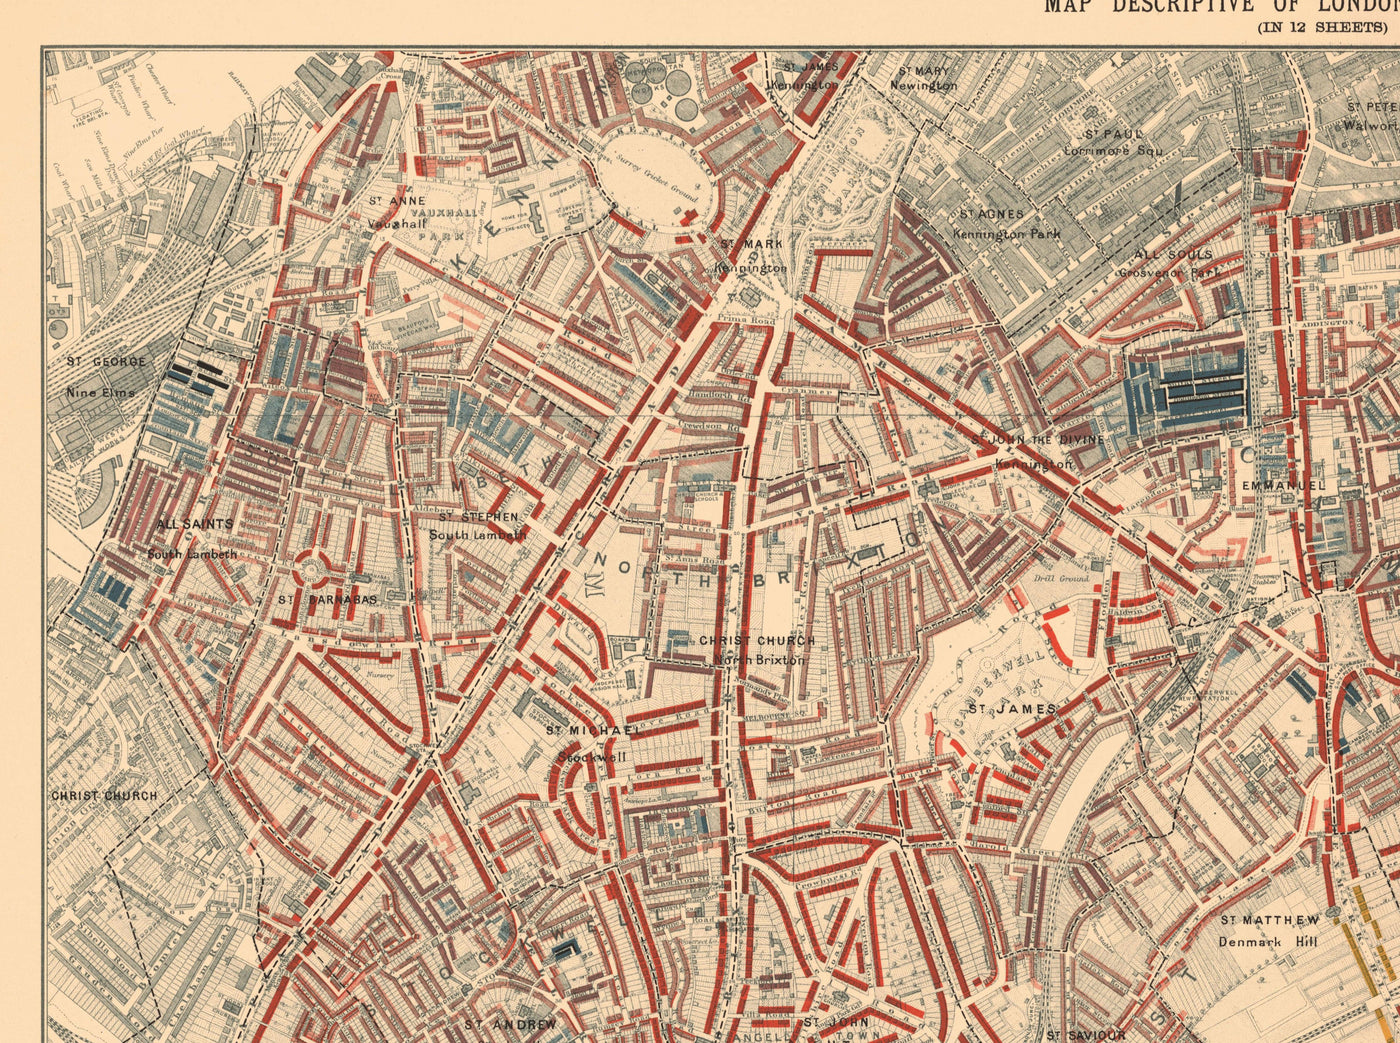 Karte der Londoner Armut 1898-9, außerhalb des südlichen Bezirks, von Charles Booth - Oval, Brixton, Herne Hill, Lambeth - SW8, SW9, SW2, SE5, SE24, SE22, SE15